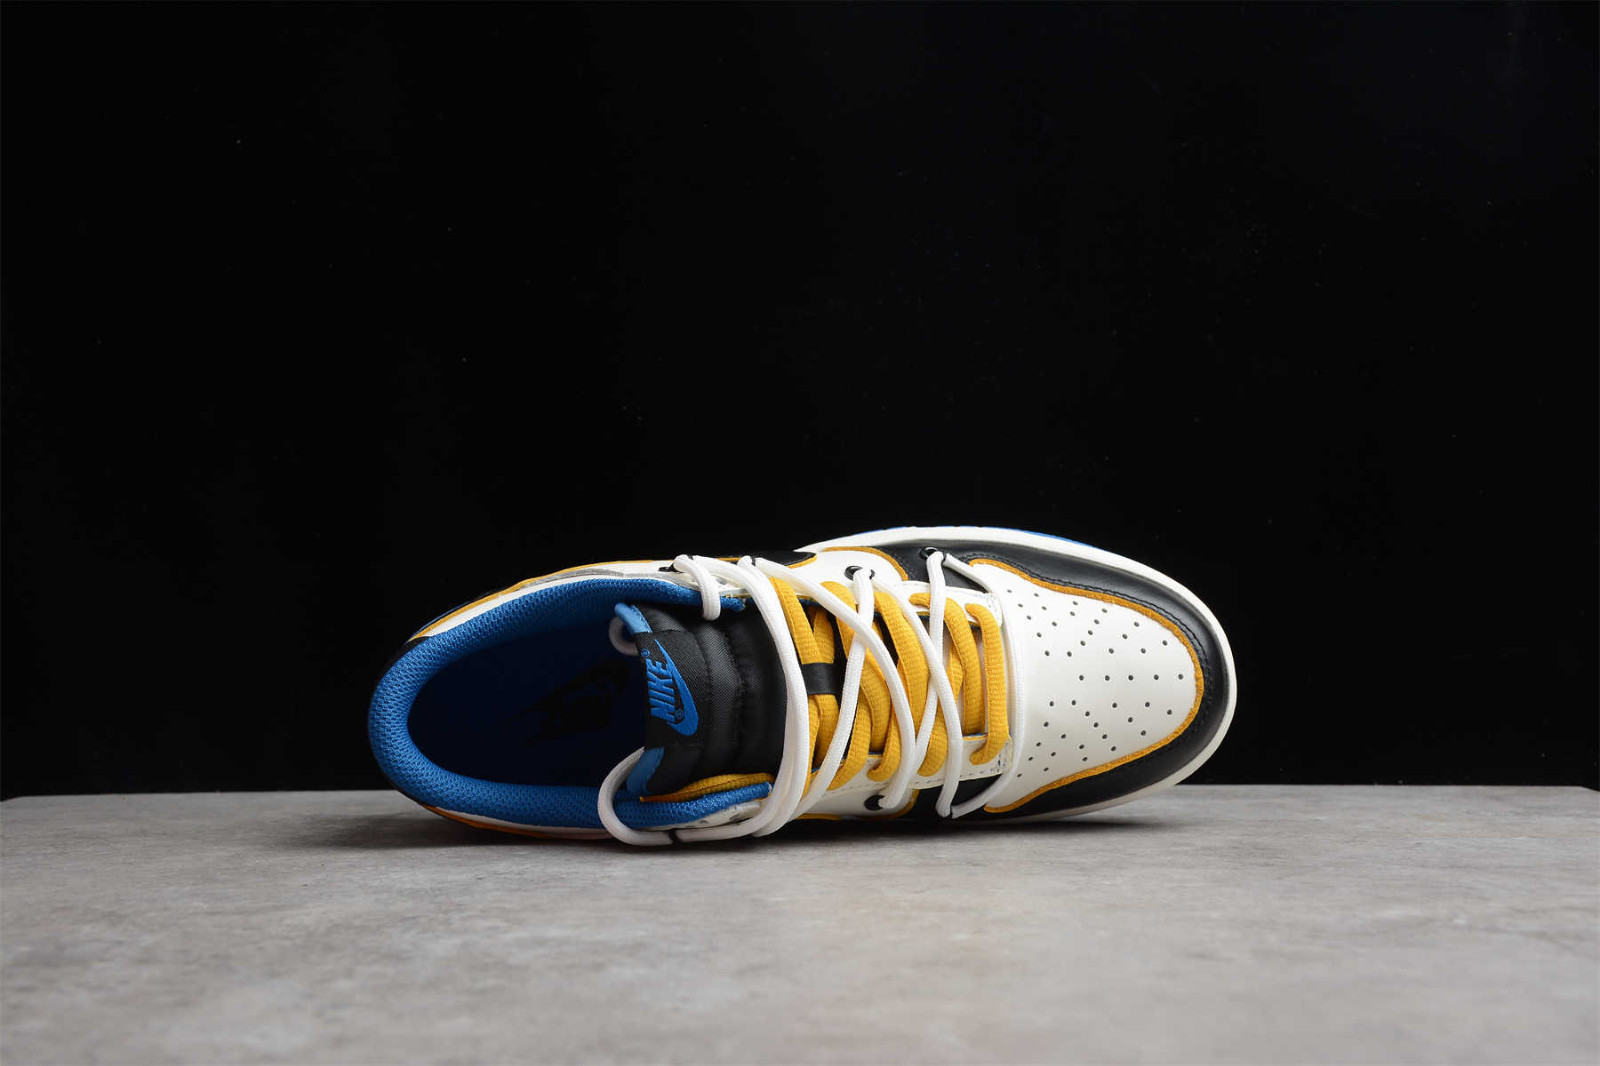 Nike Dunk Low Retro Racer Blue White Shoes DD1391-401 Men's Sizes